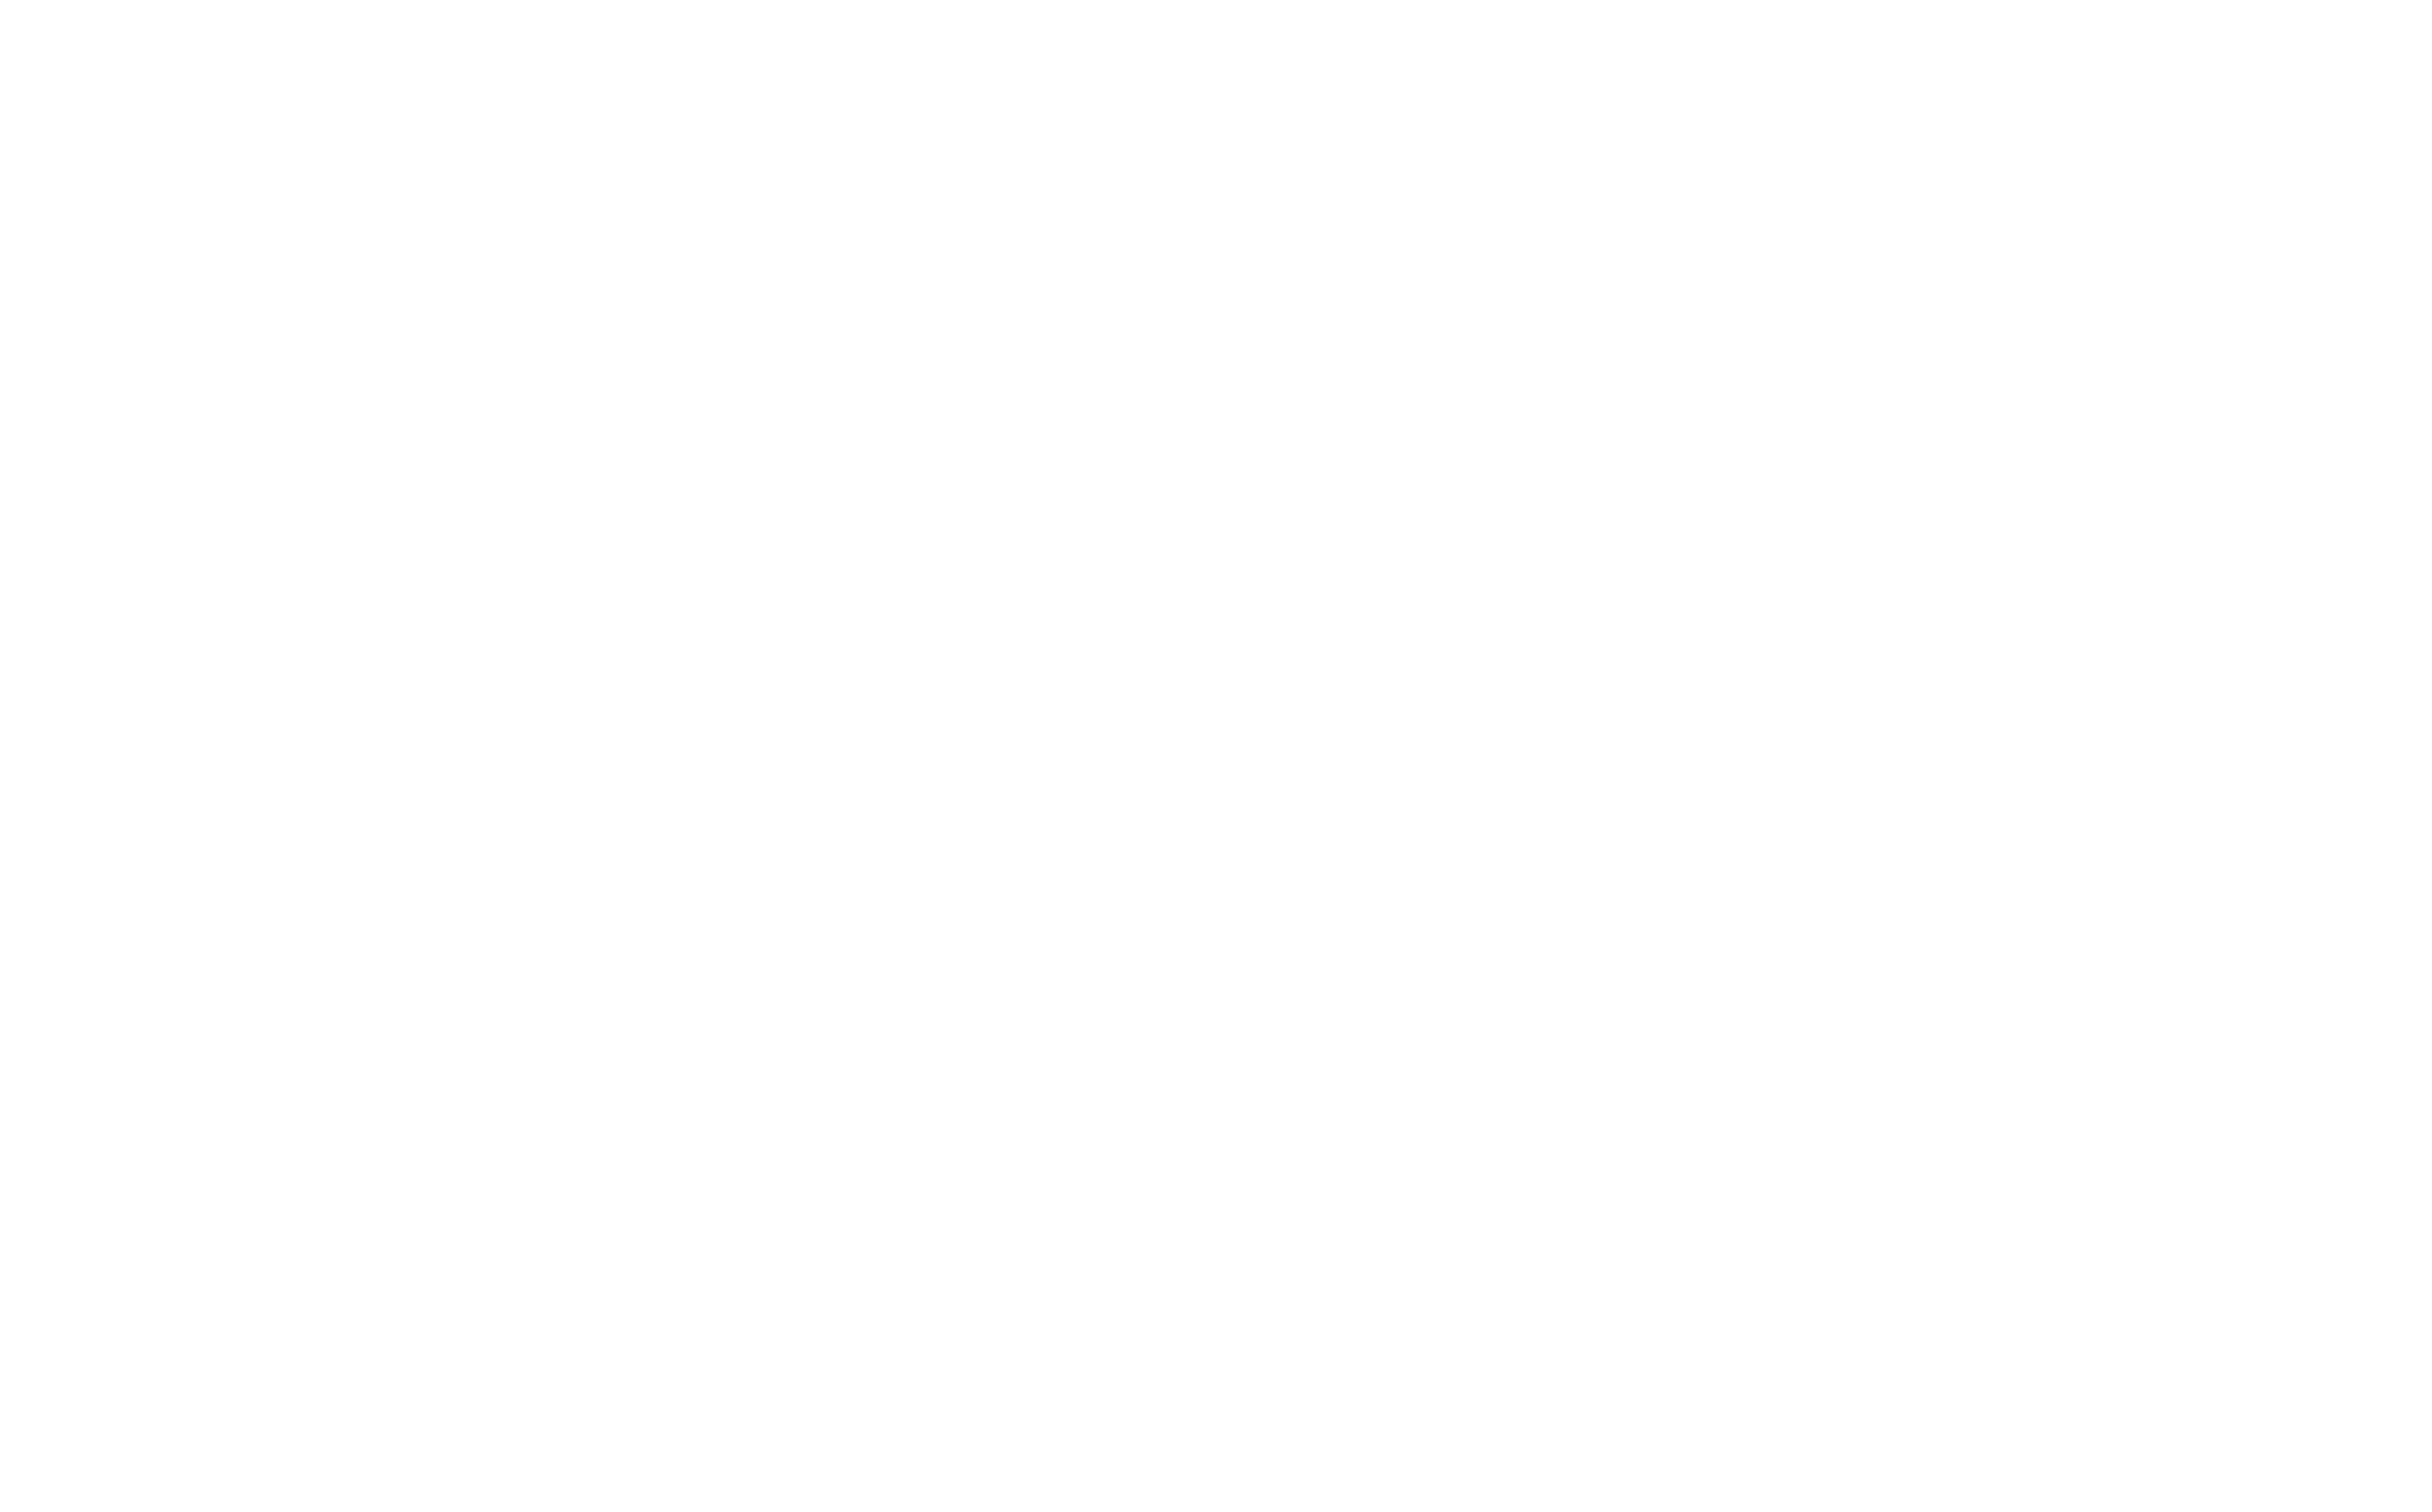 Rexa Wars logo